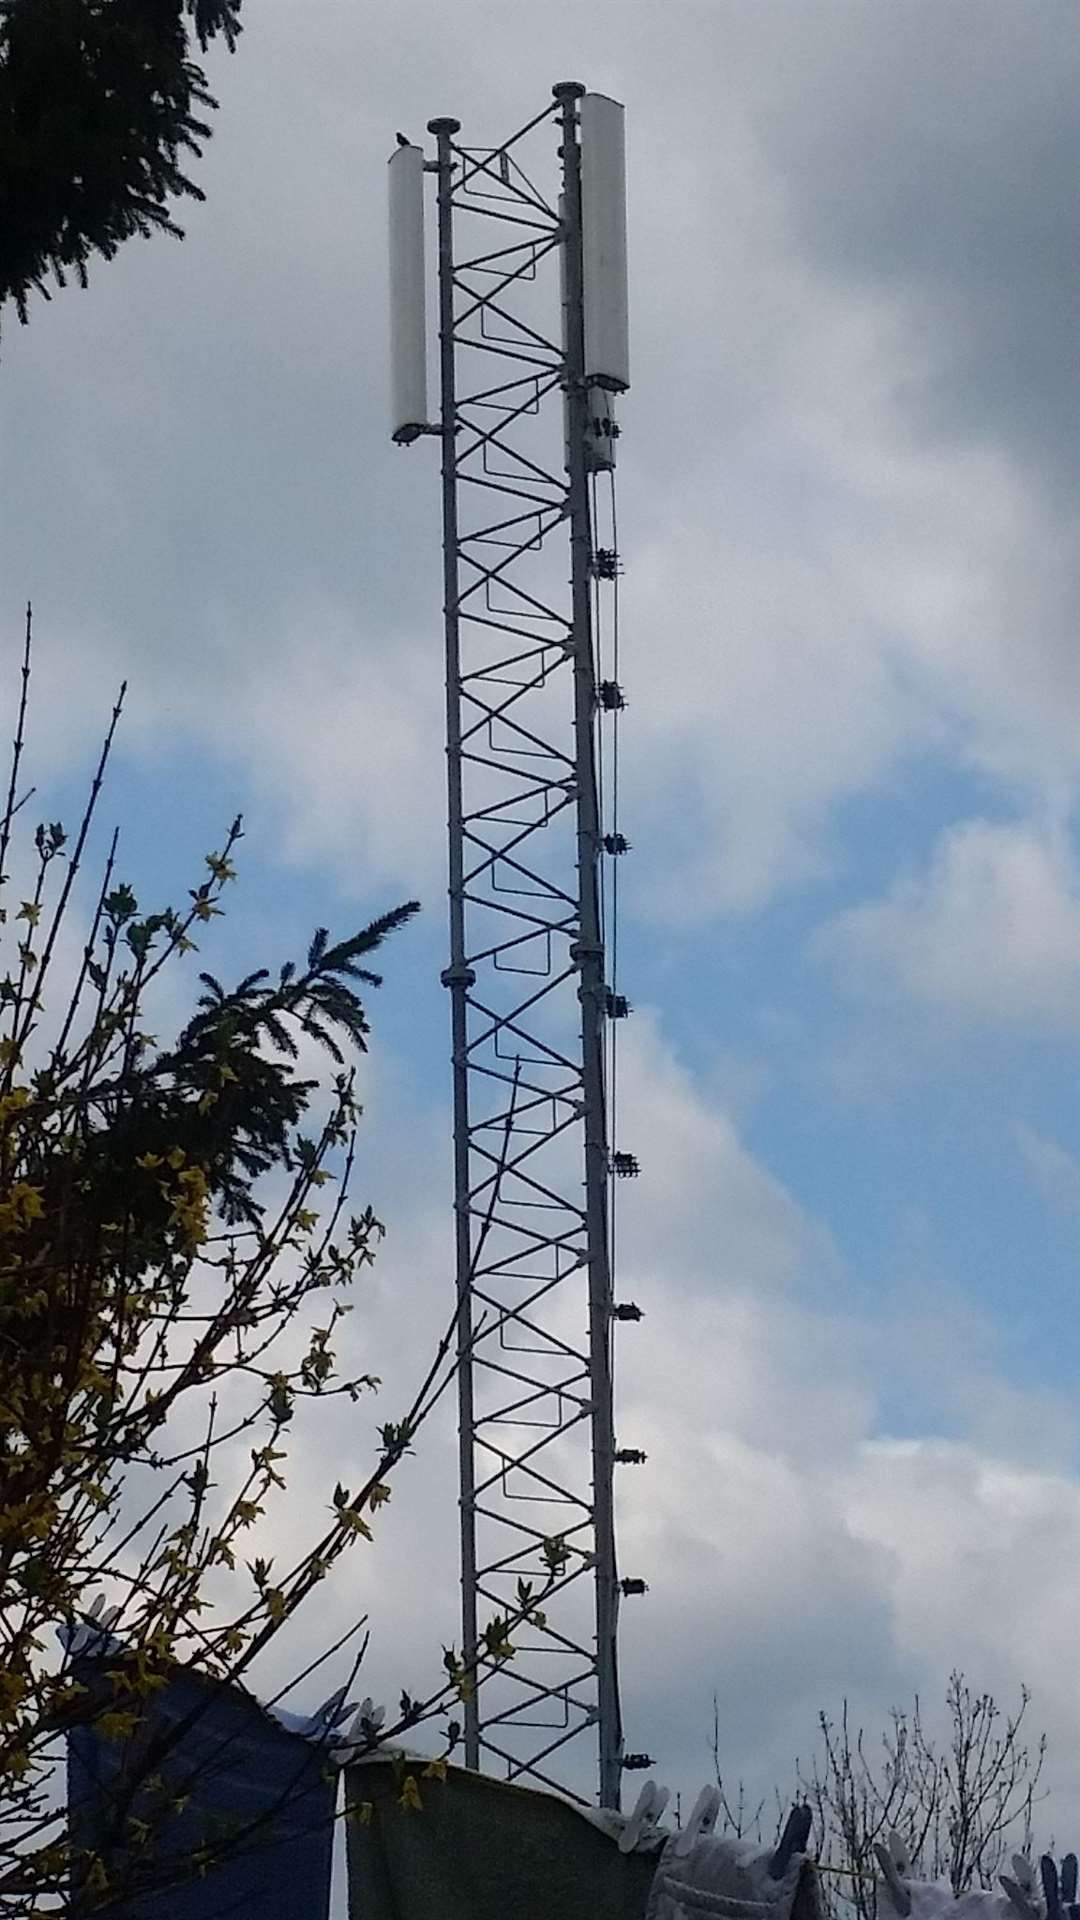 The mast at Quarry Hill, Tonbridge